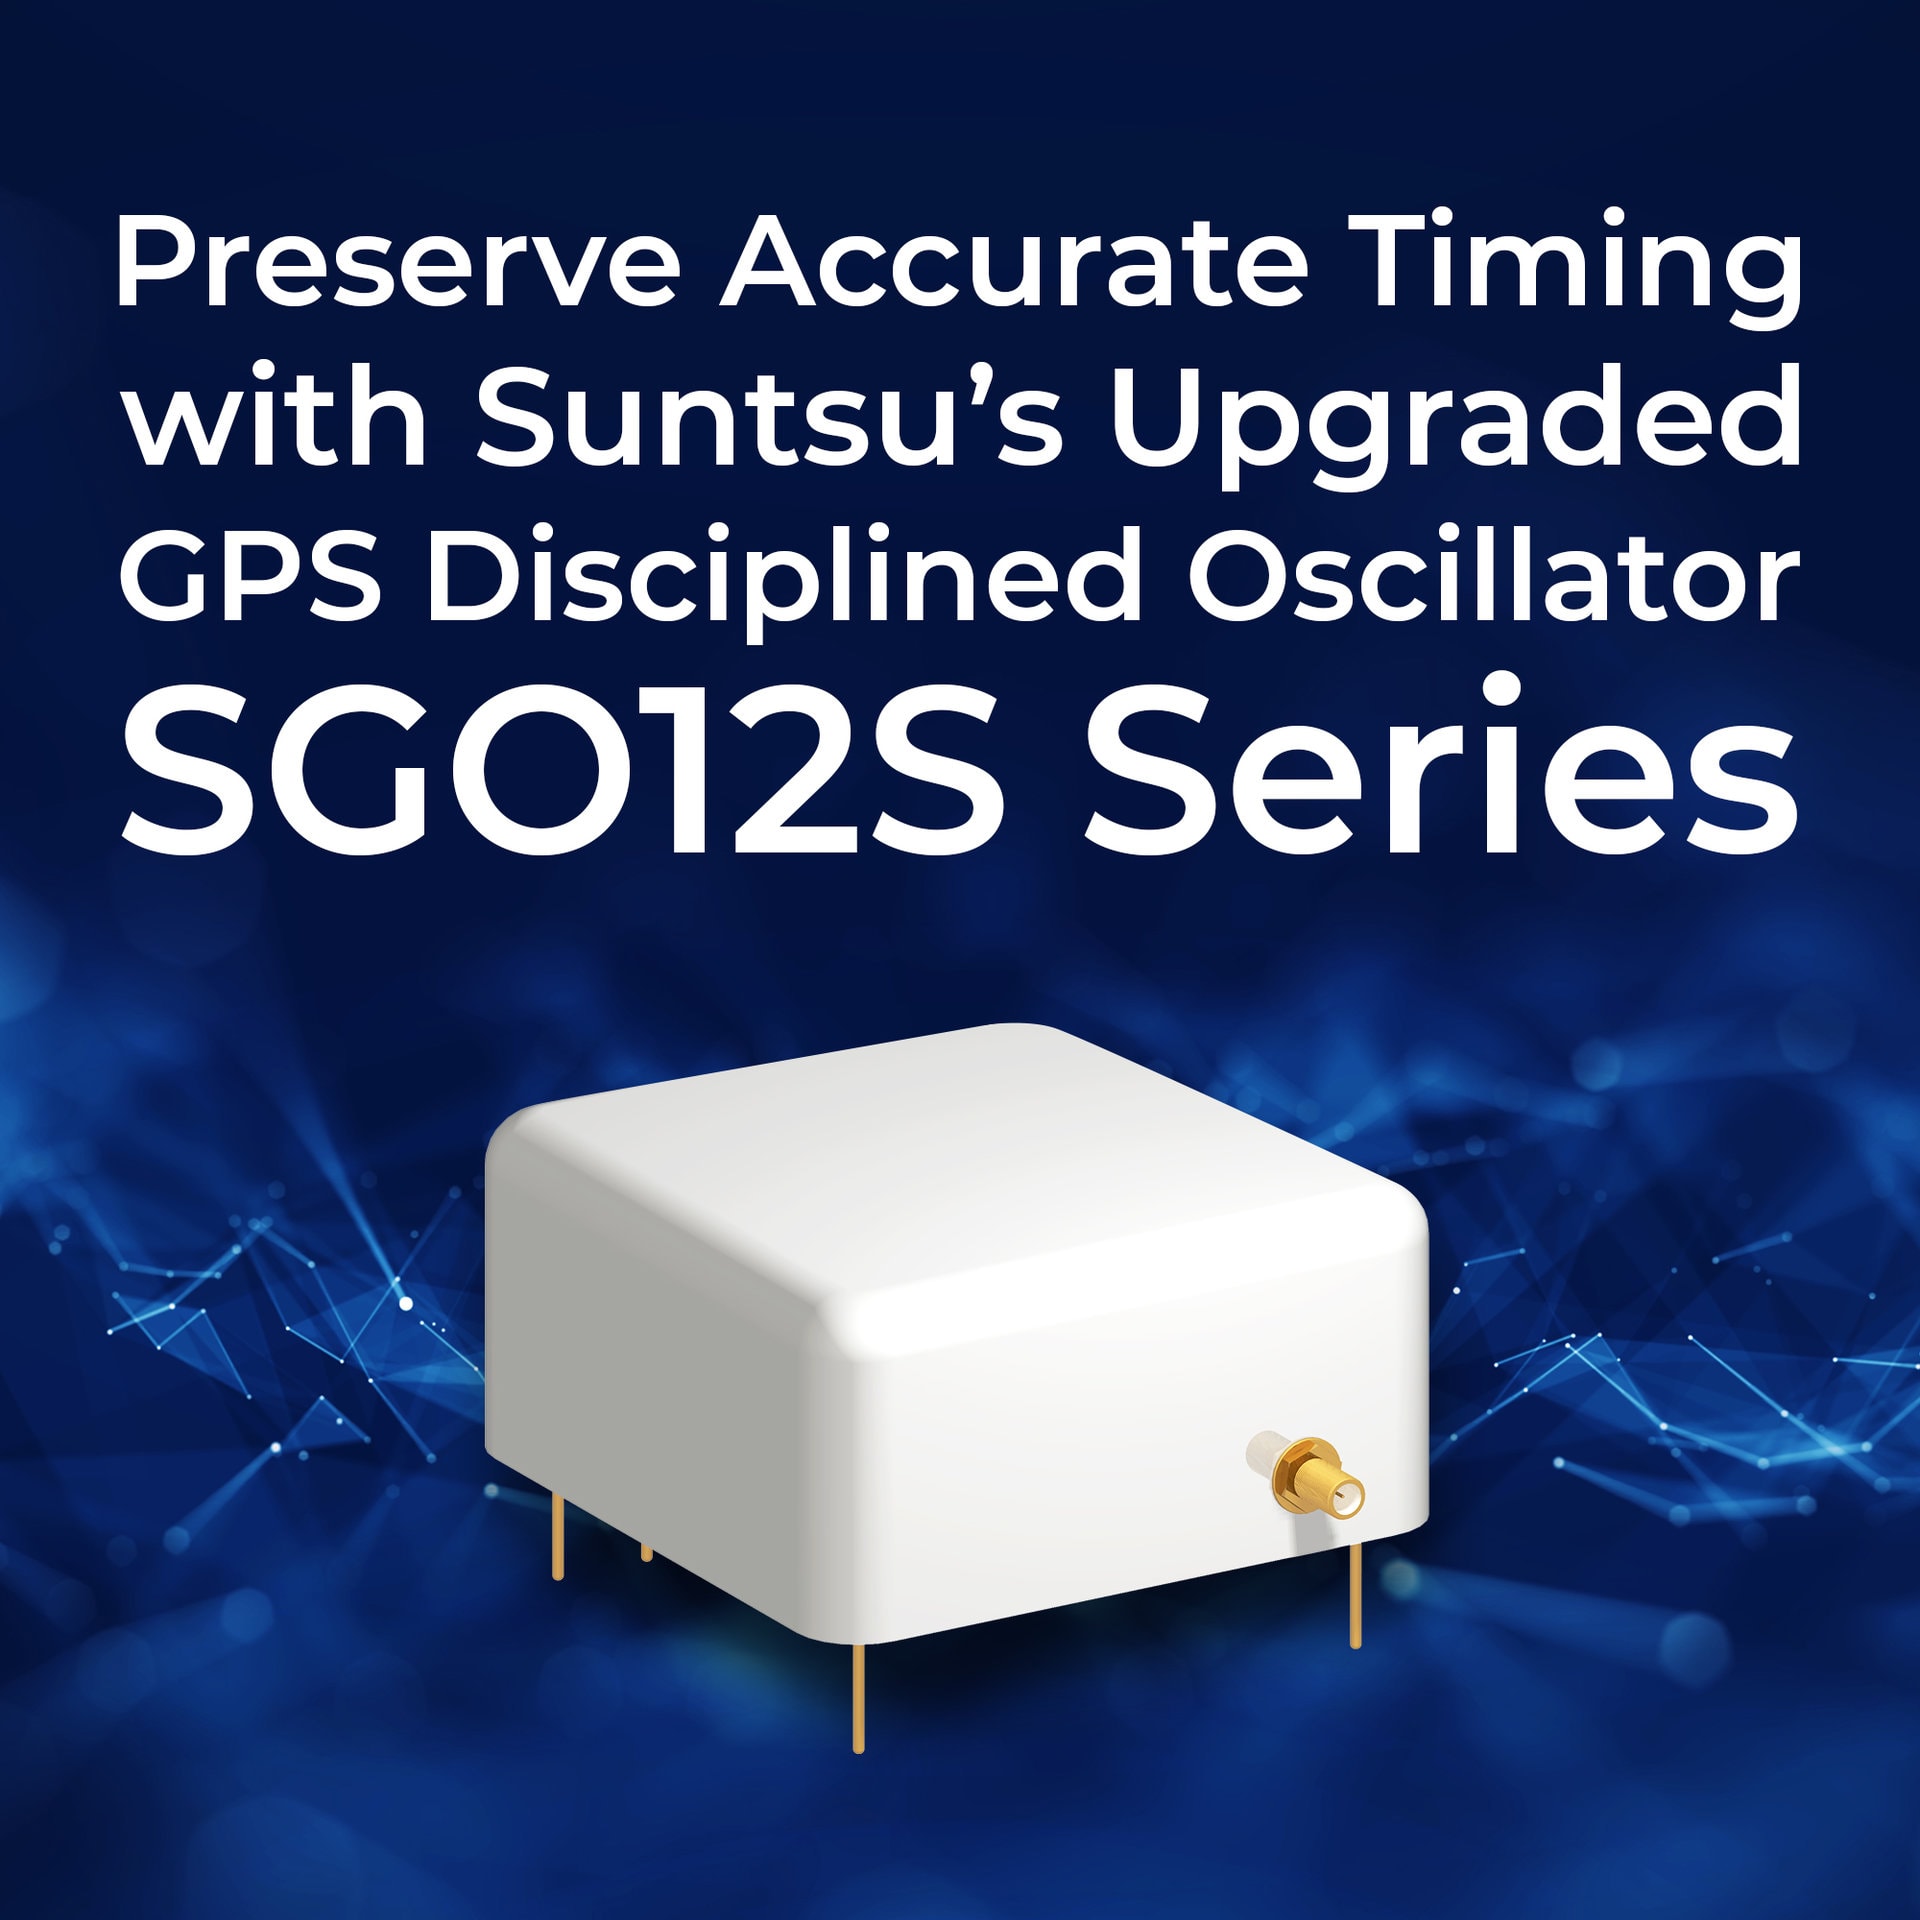 Preserve Accurate Timing with Suntsu’s Upgraded GPS Disciplined Oscillator SGO12S Series